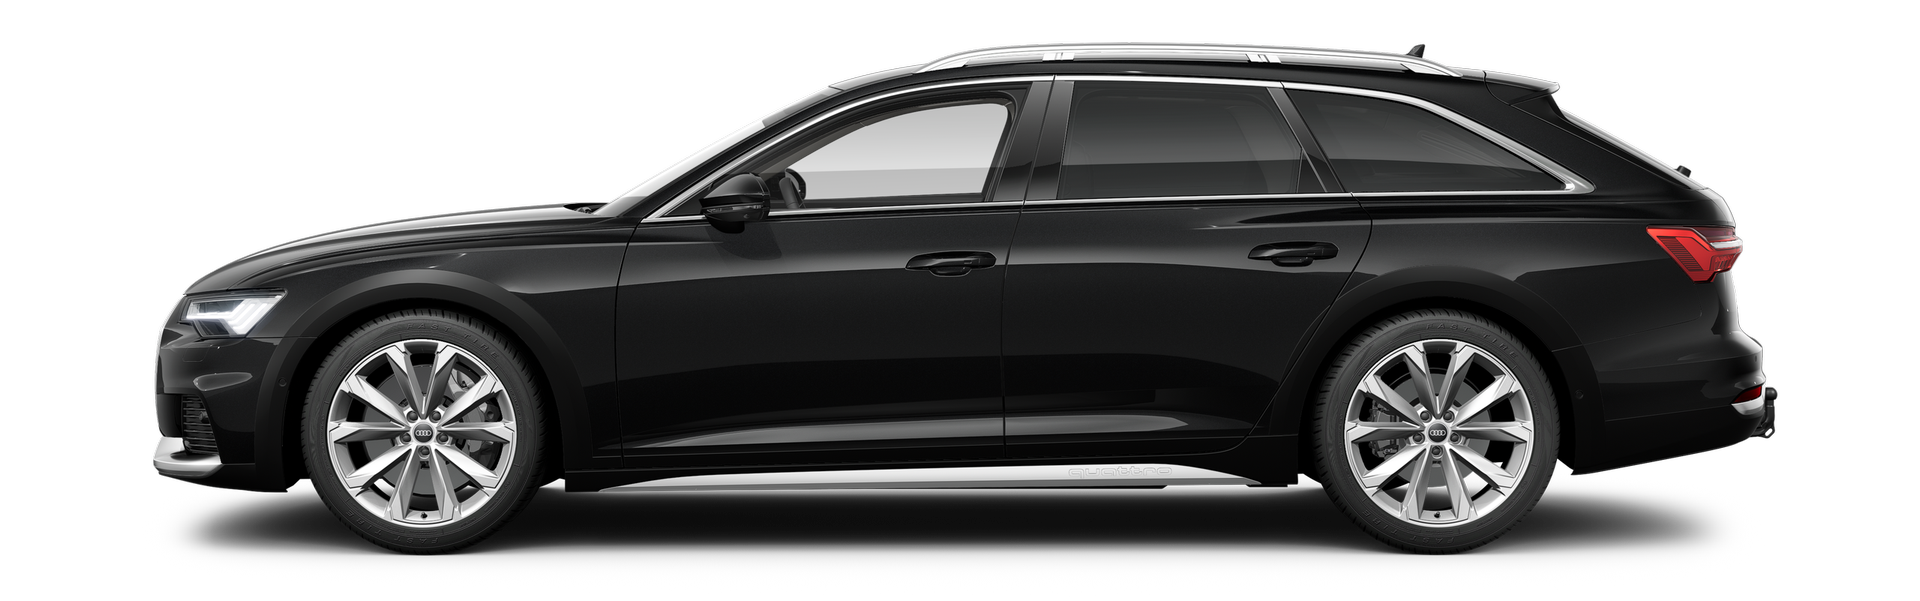 Audi S6 exterior - Side Profile